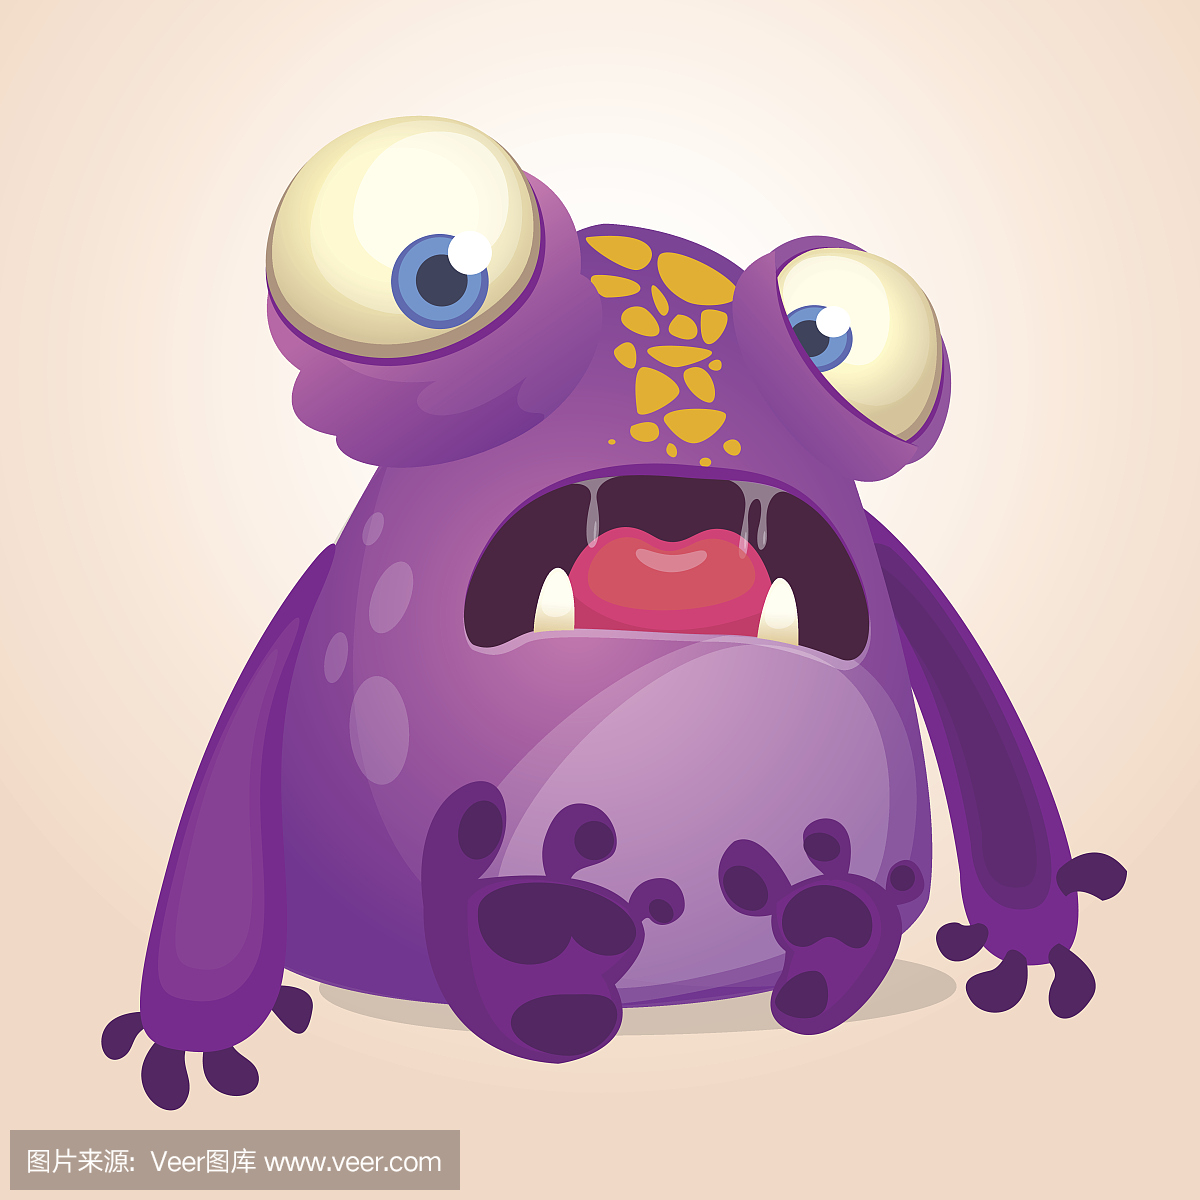 Cute cartoon monster. Halloween vector illustra